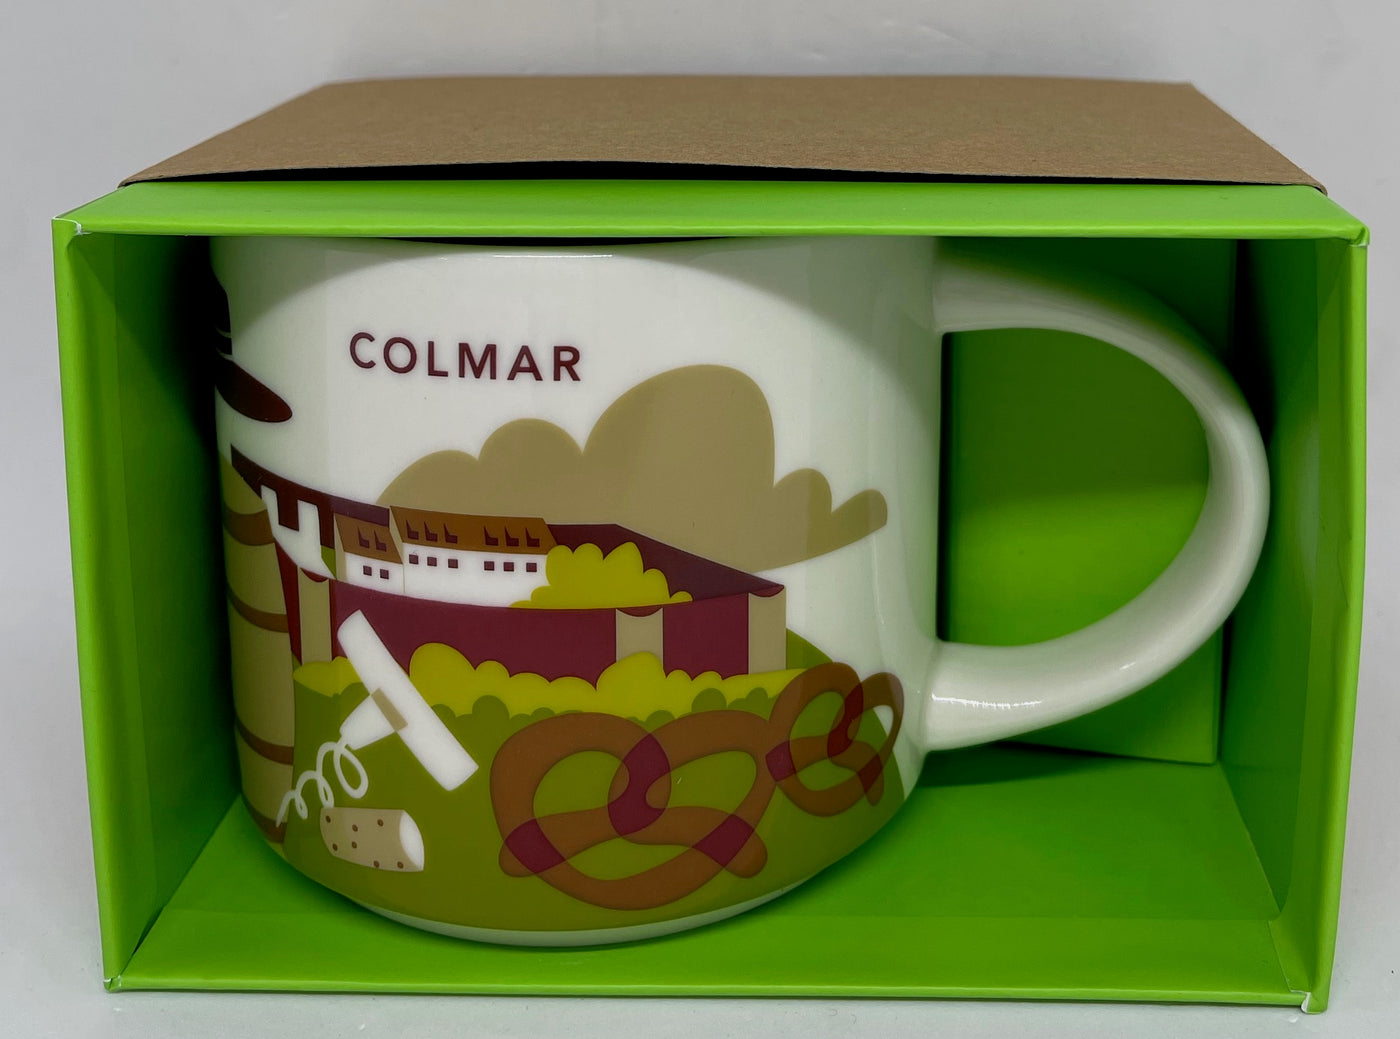 Starbucks You Are Here Collection Colmar France Ceramic Coffee Mug New Box